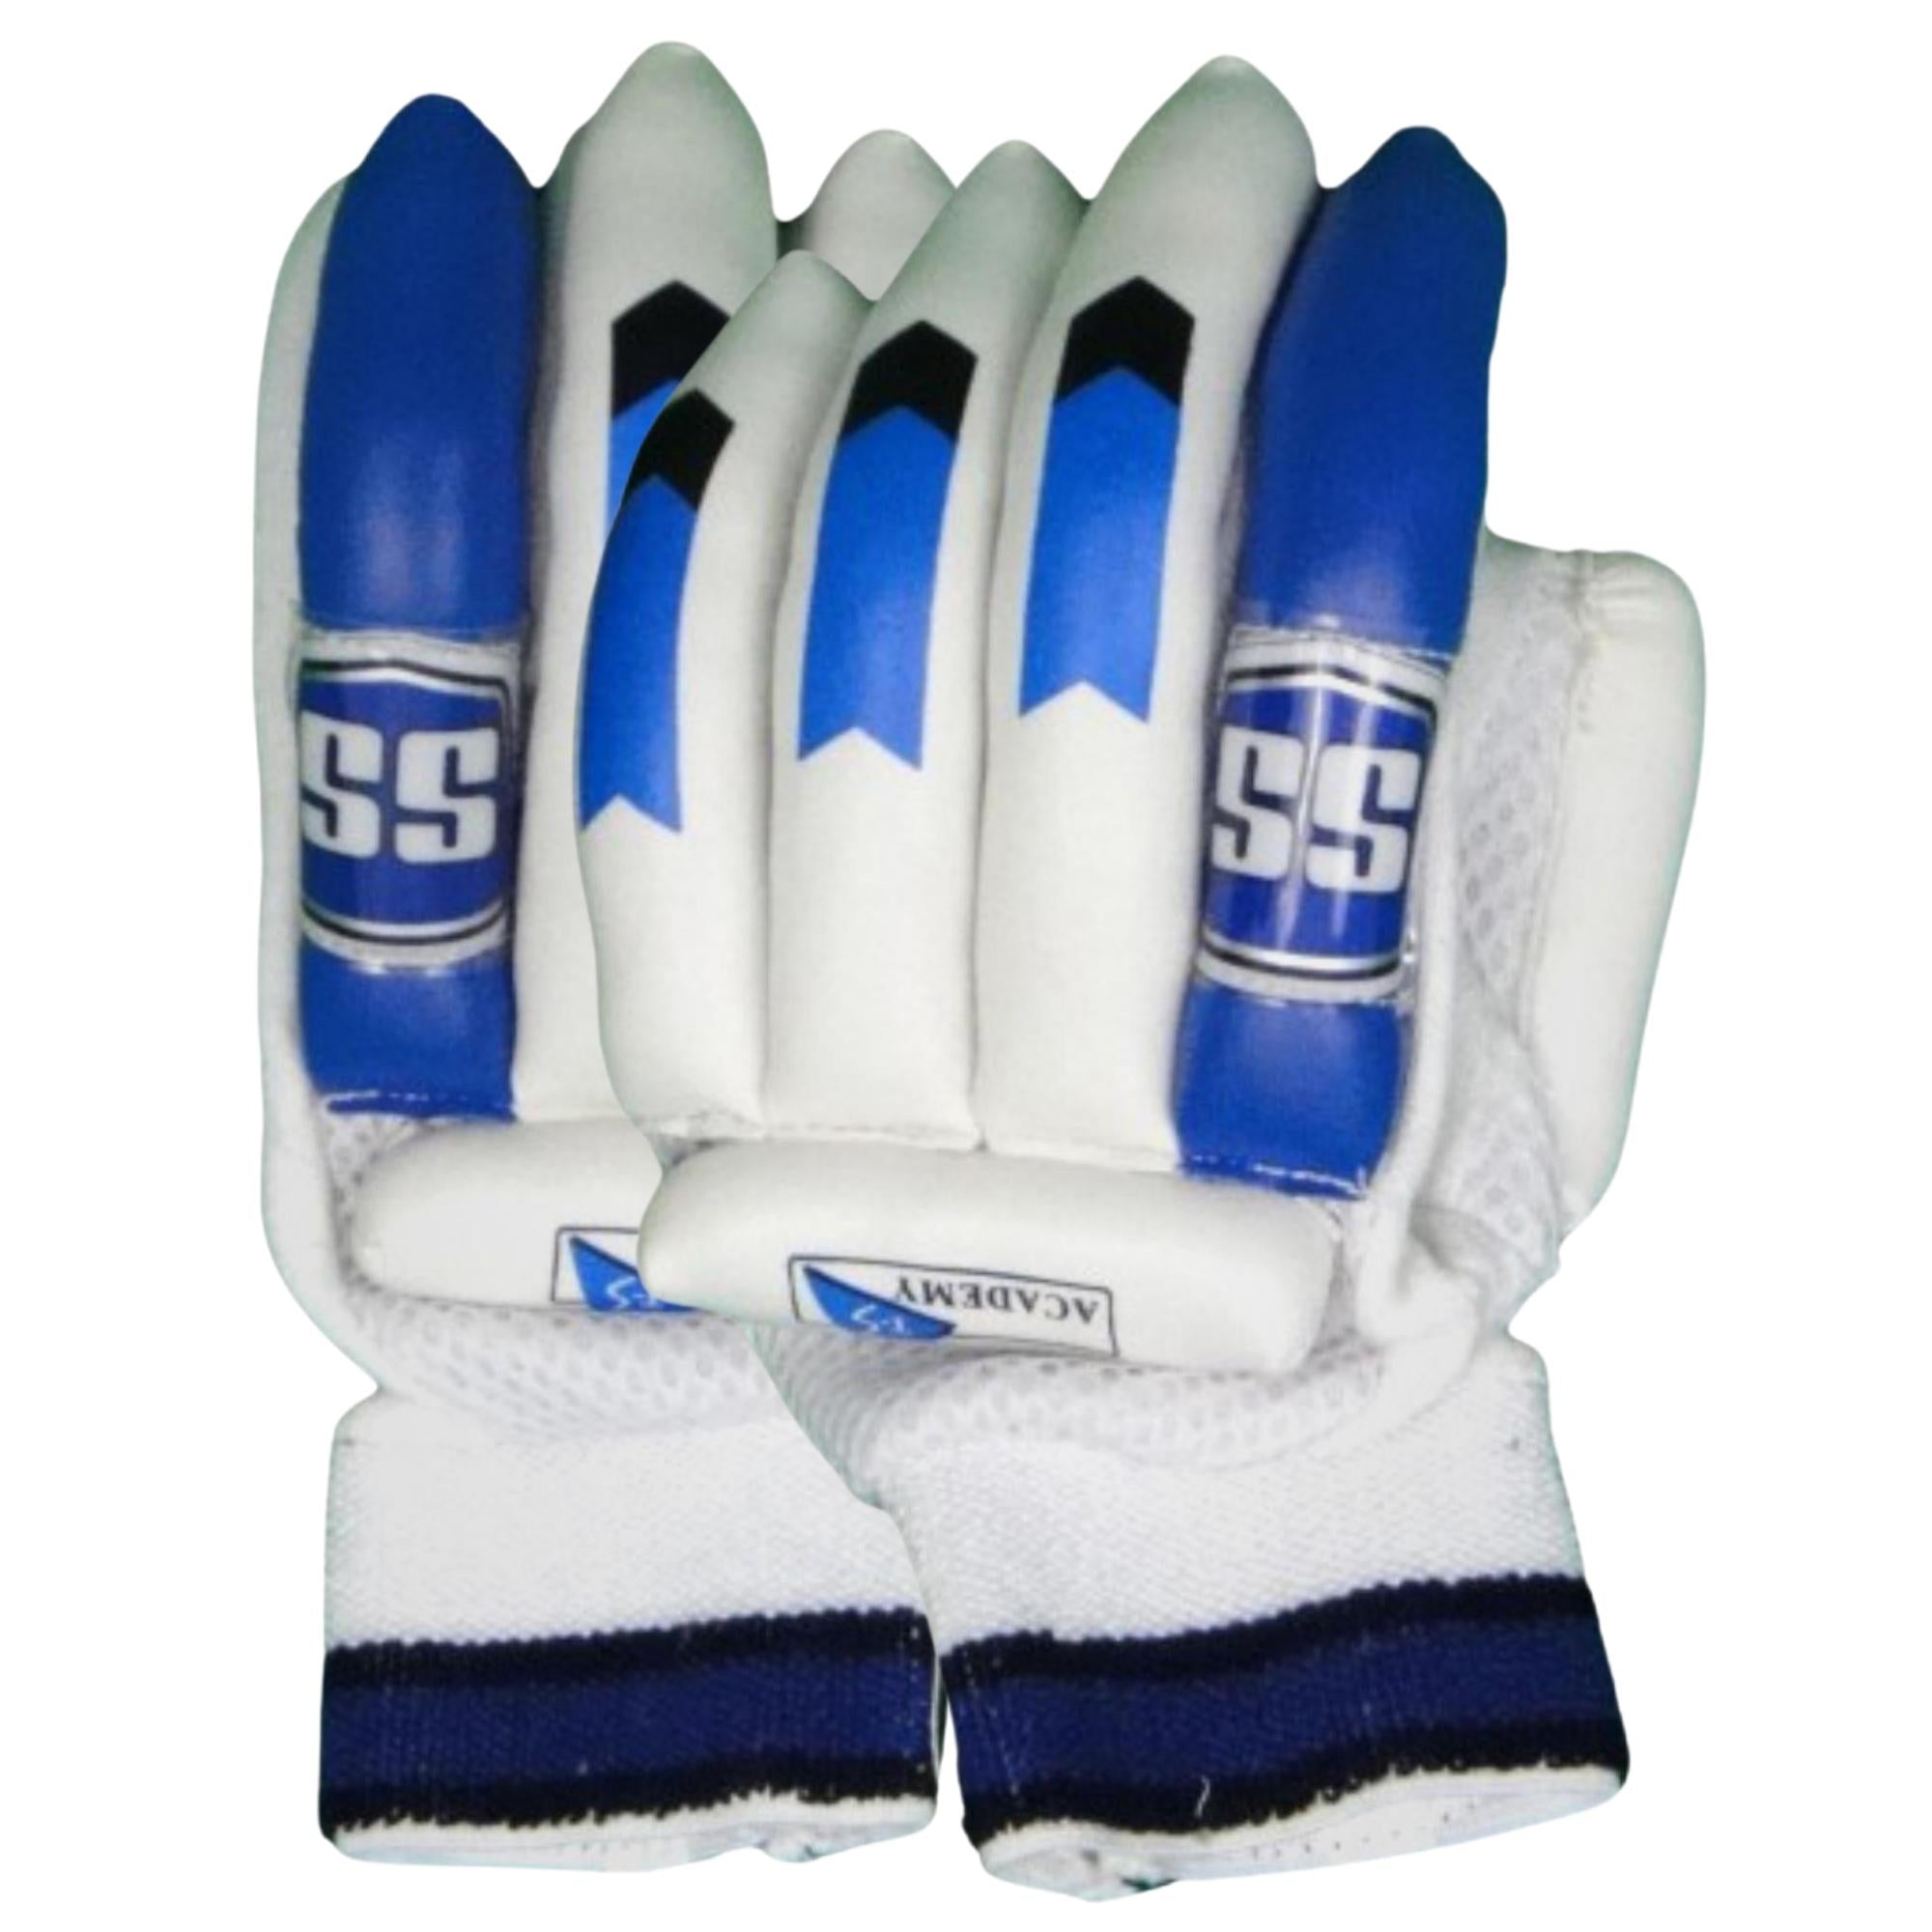 SS Academy Batting Gloves